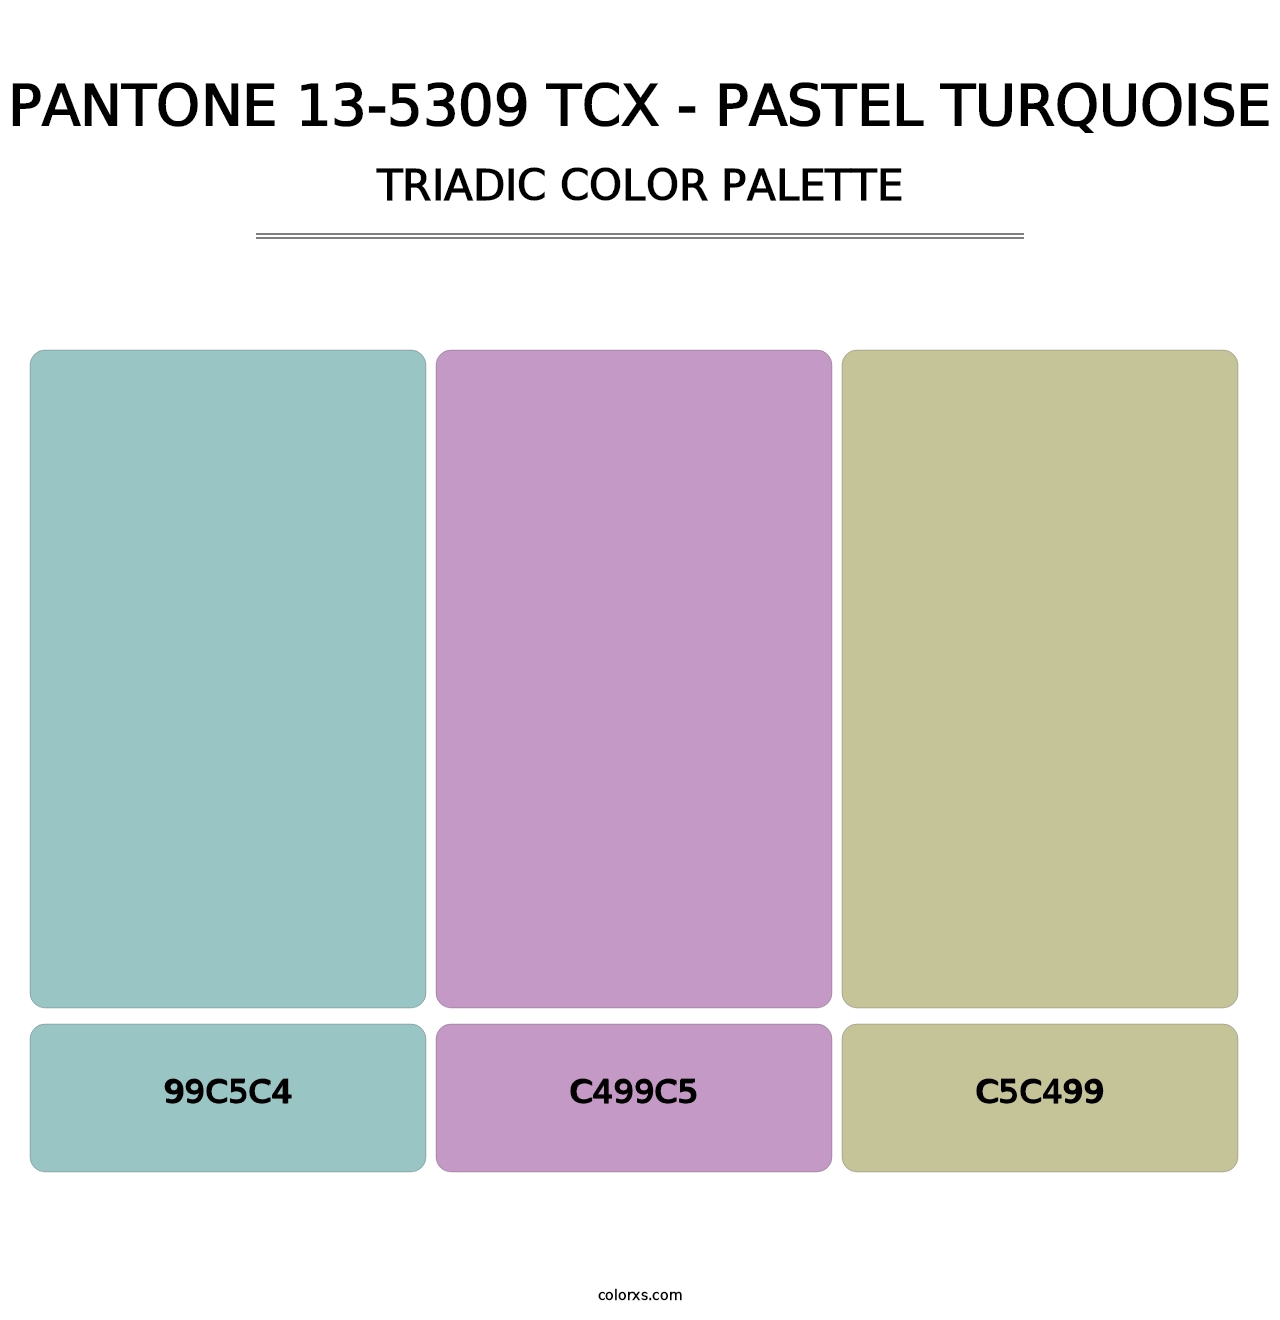 PANTONE 13-5309 TCX - Pastel Turquoise - Triadic Color Palette